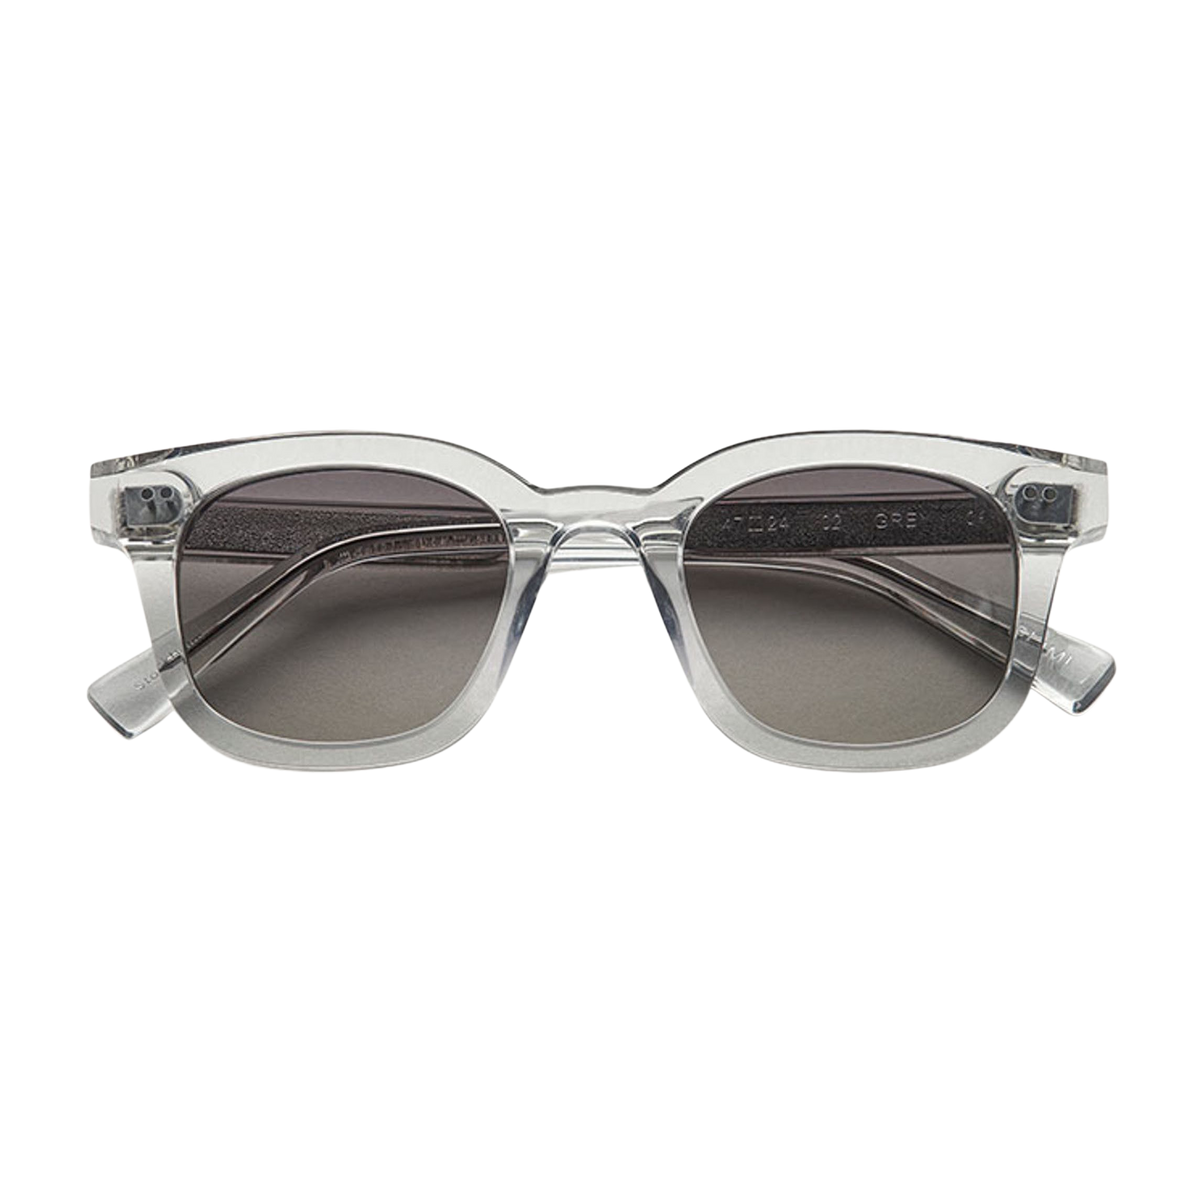 Chimi Eyewear Model 02 Grey Gradient Lenses Sunglasses 47mm Feature